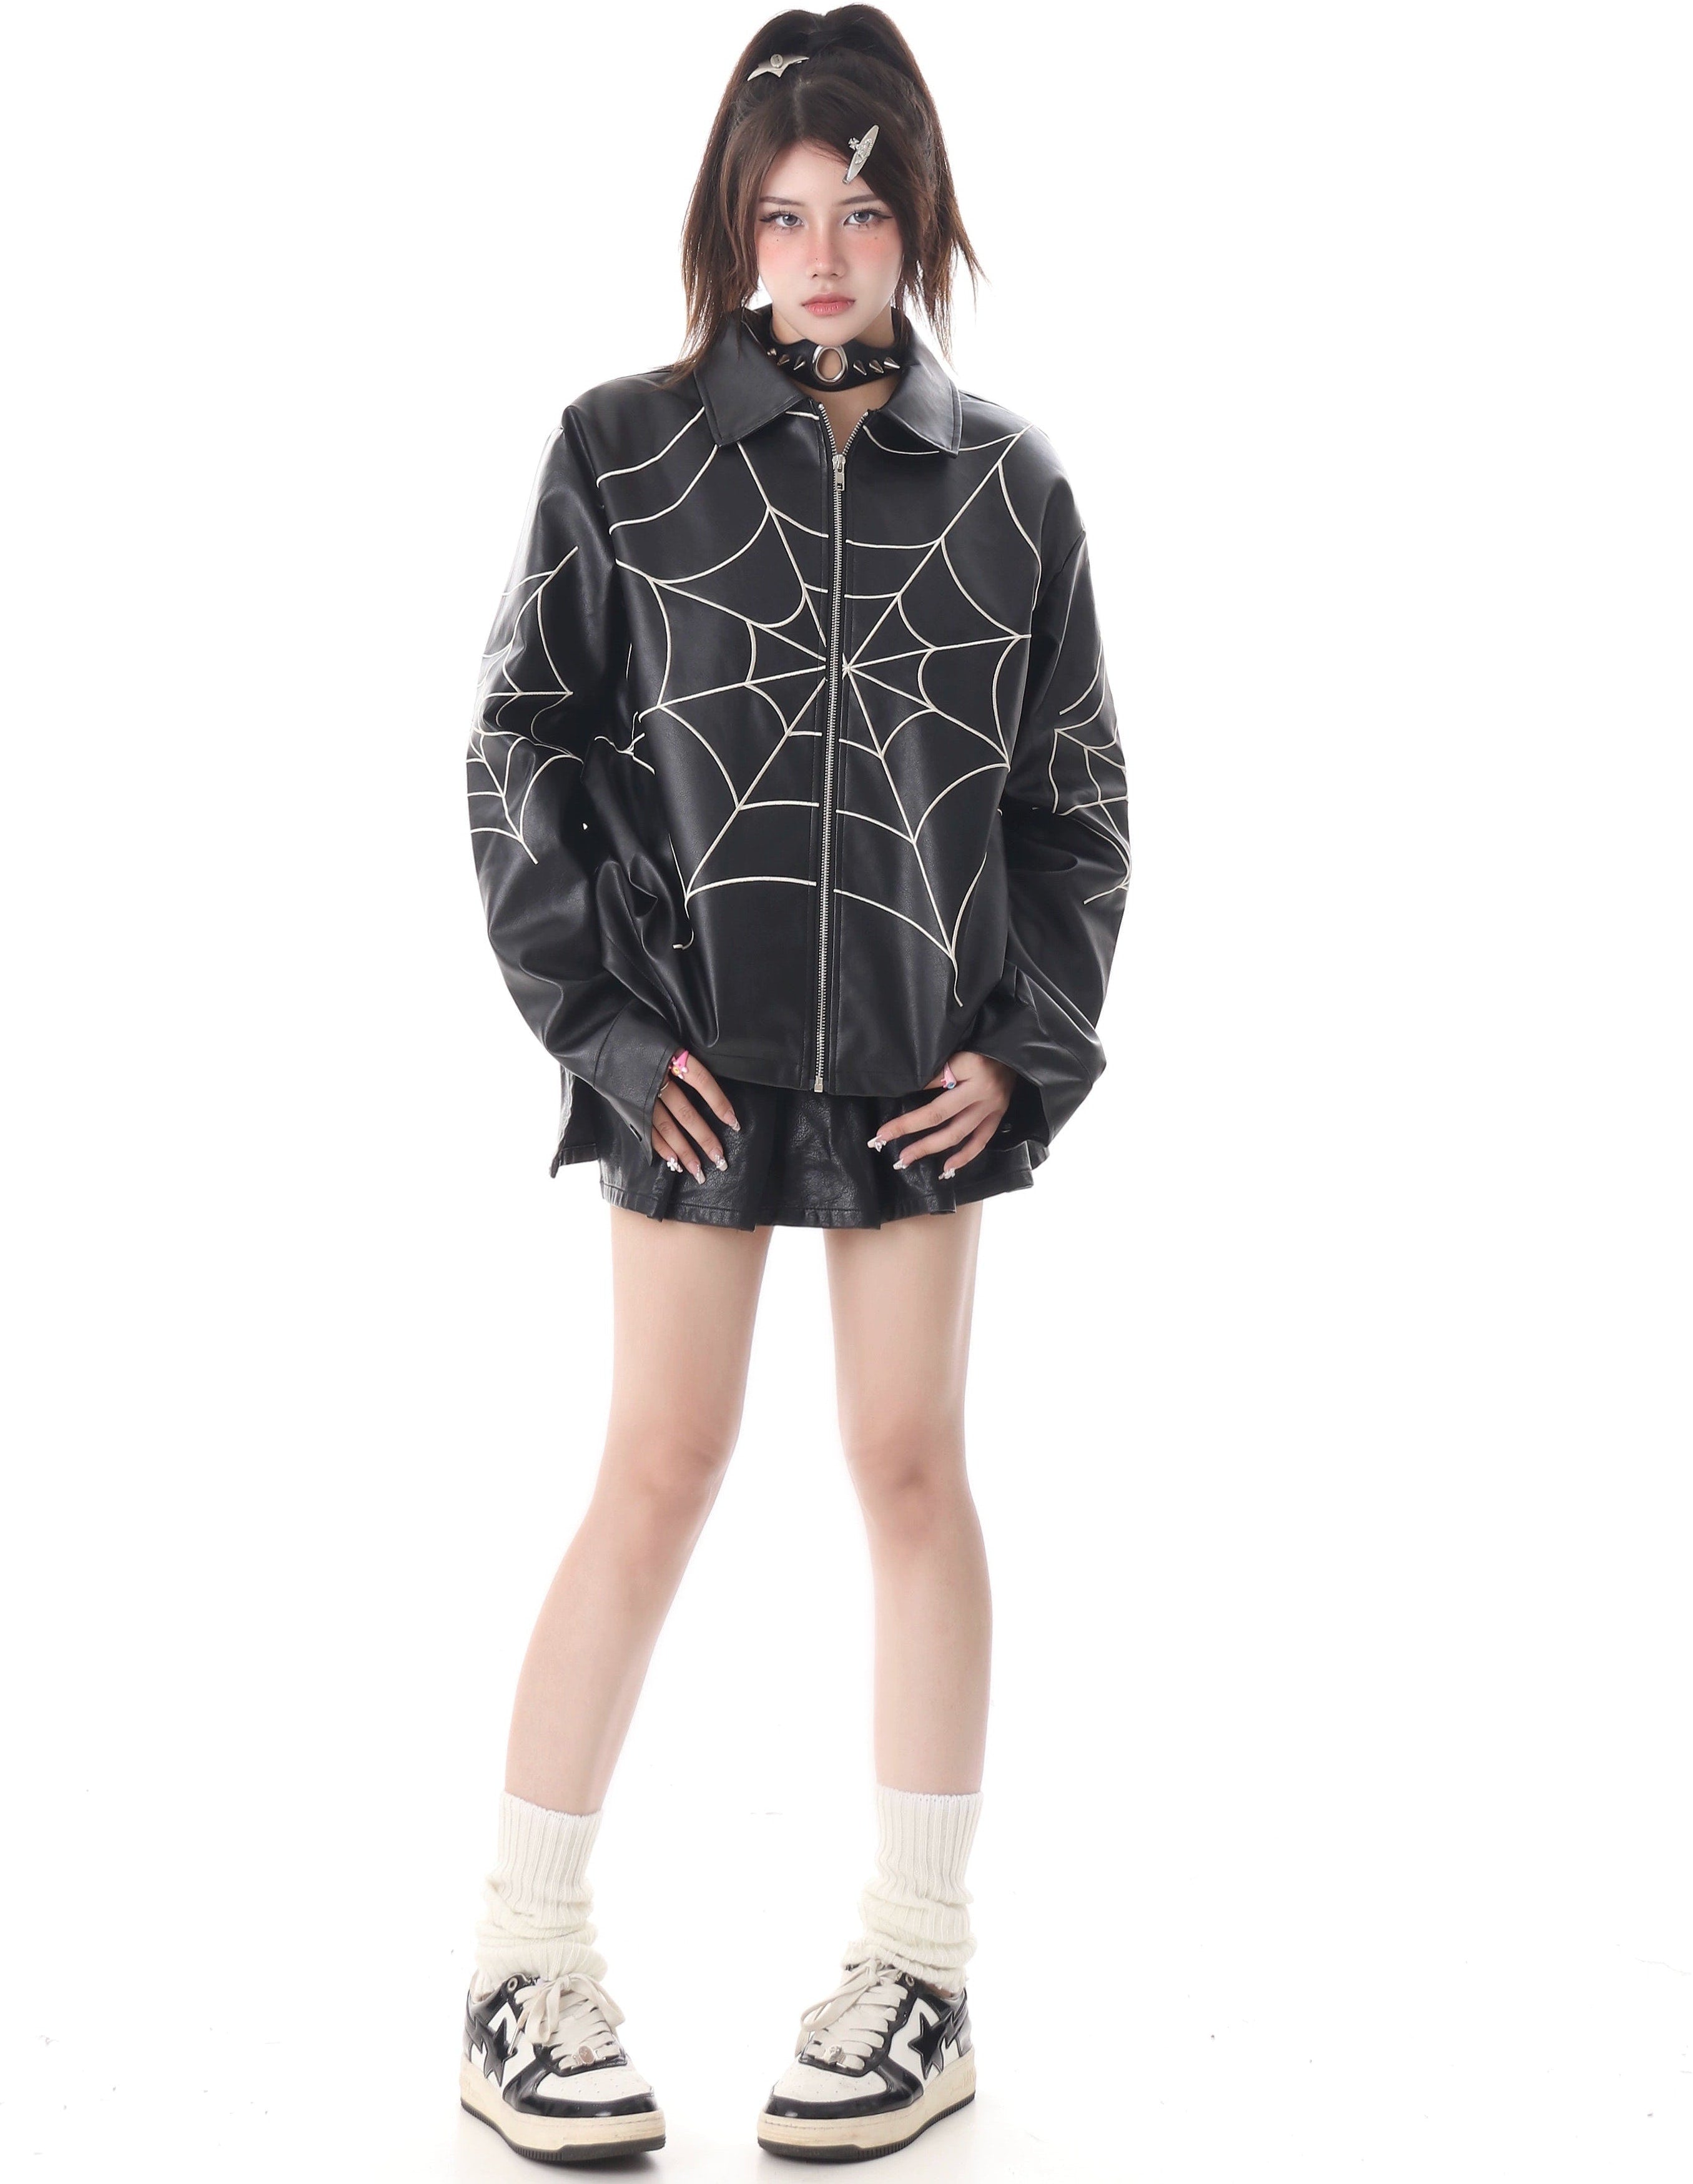 Spiderweb Print Zip-Through Faux Leather Jacket